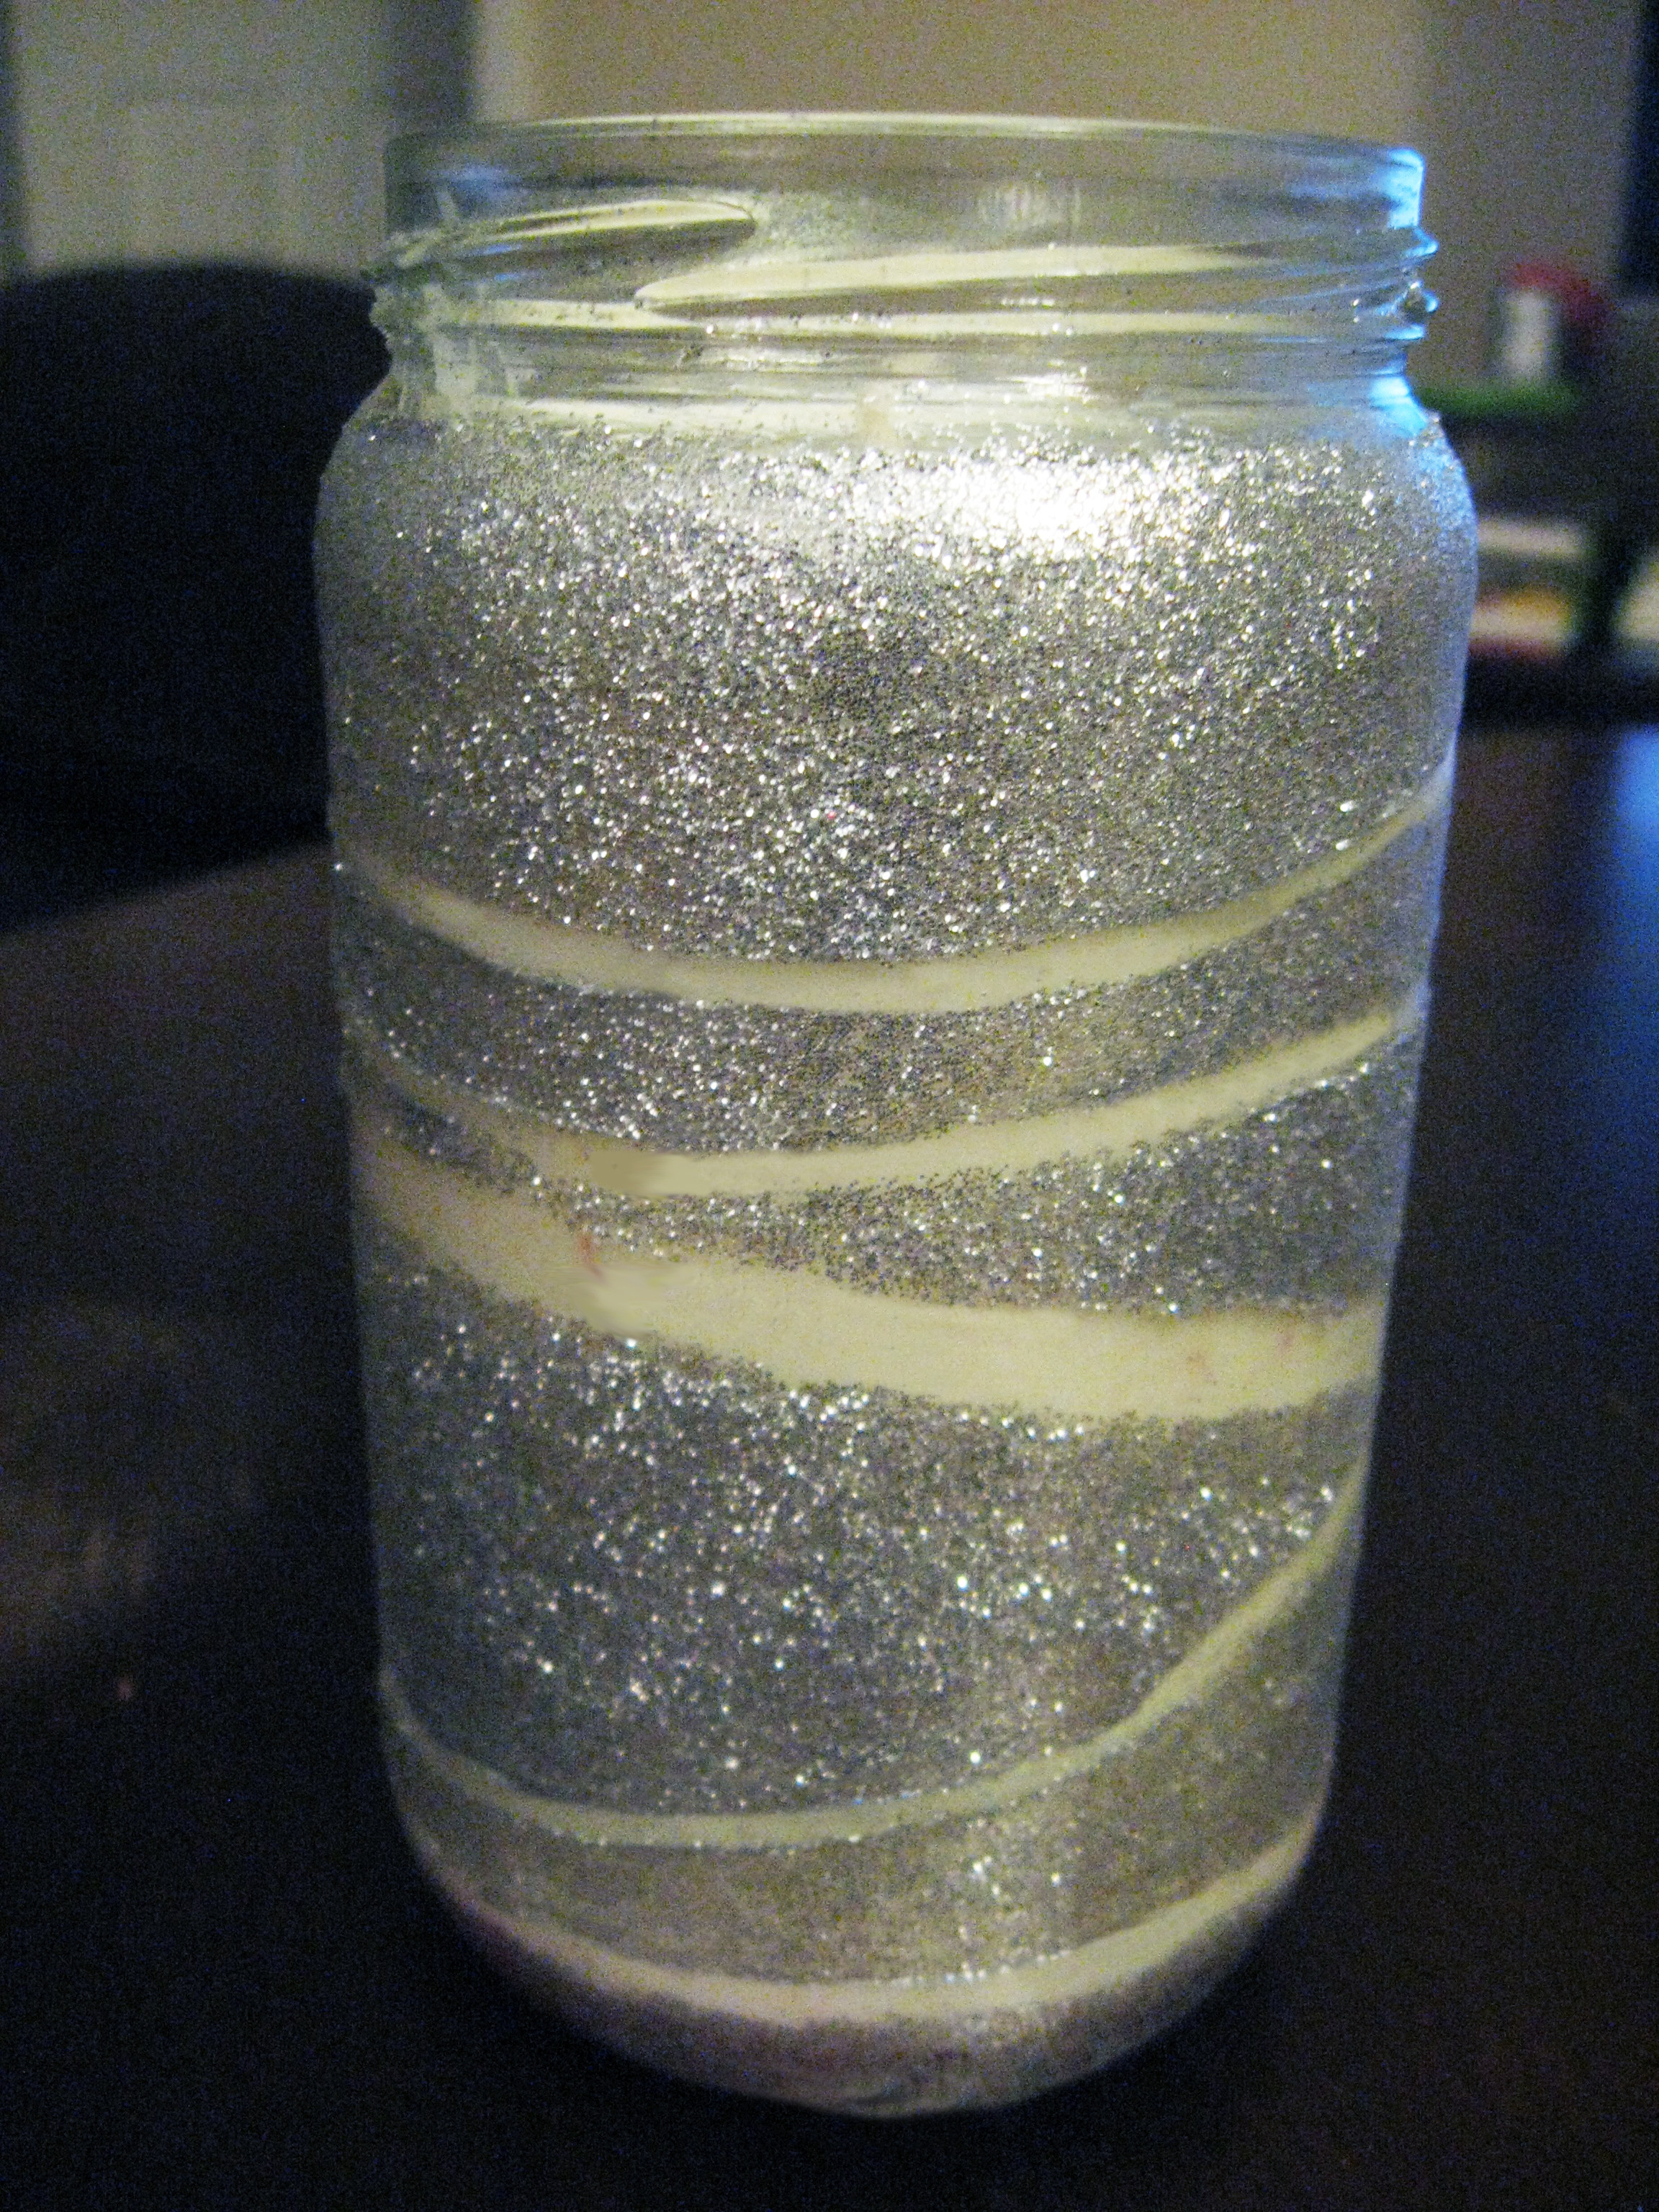 Best ideas about DIY Glitter Jar
. Save or Pin DIY Glitter Design Candle Jar Now.